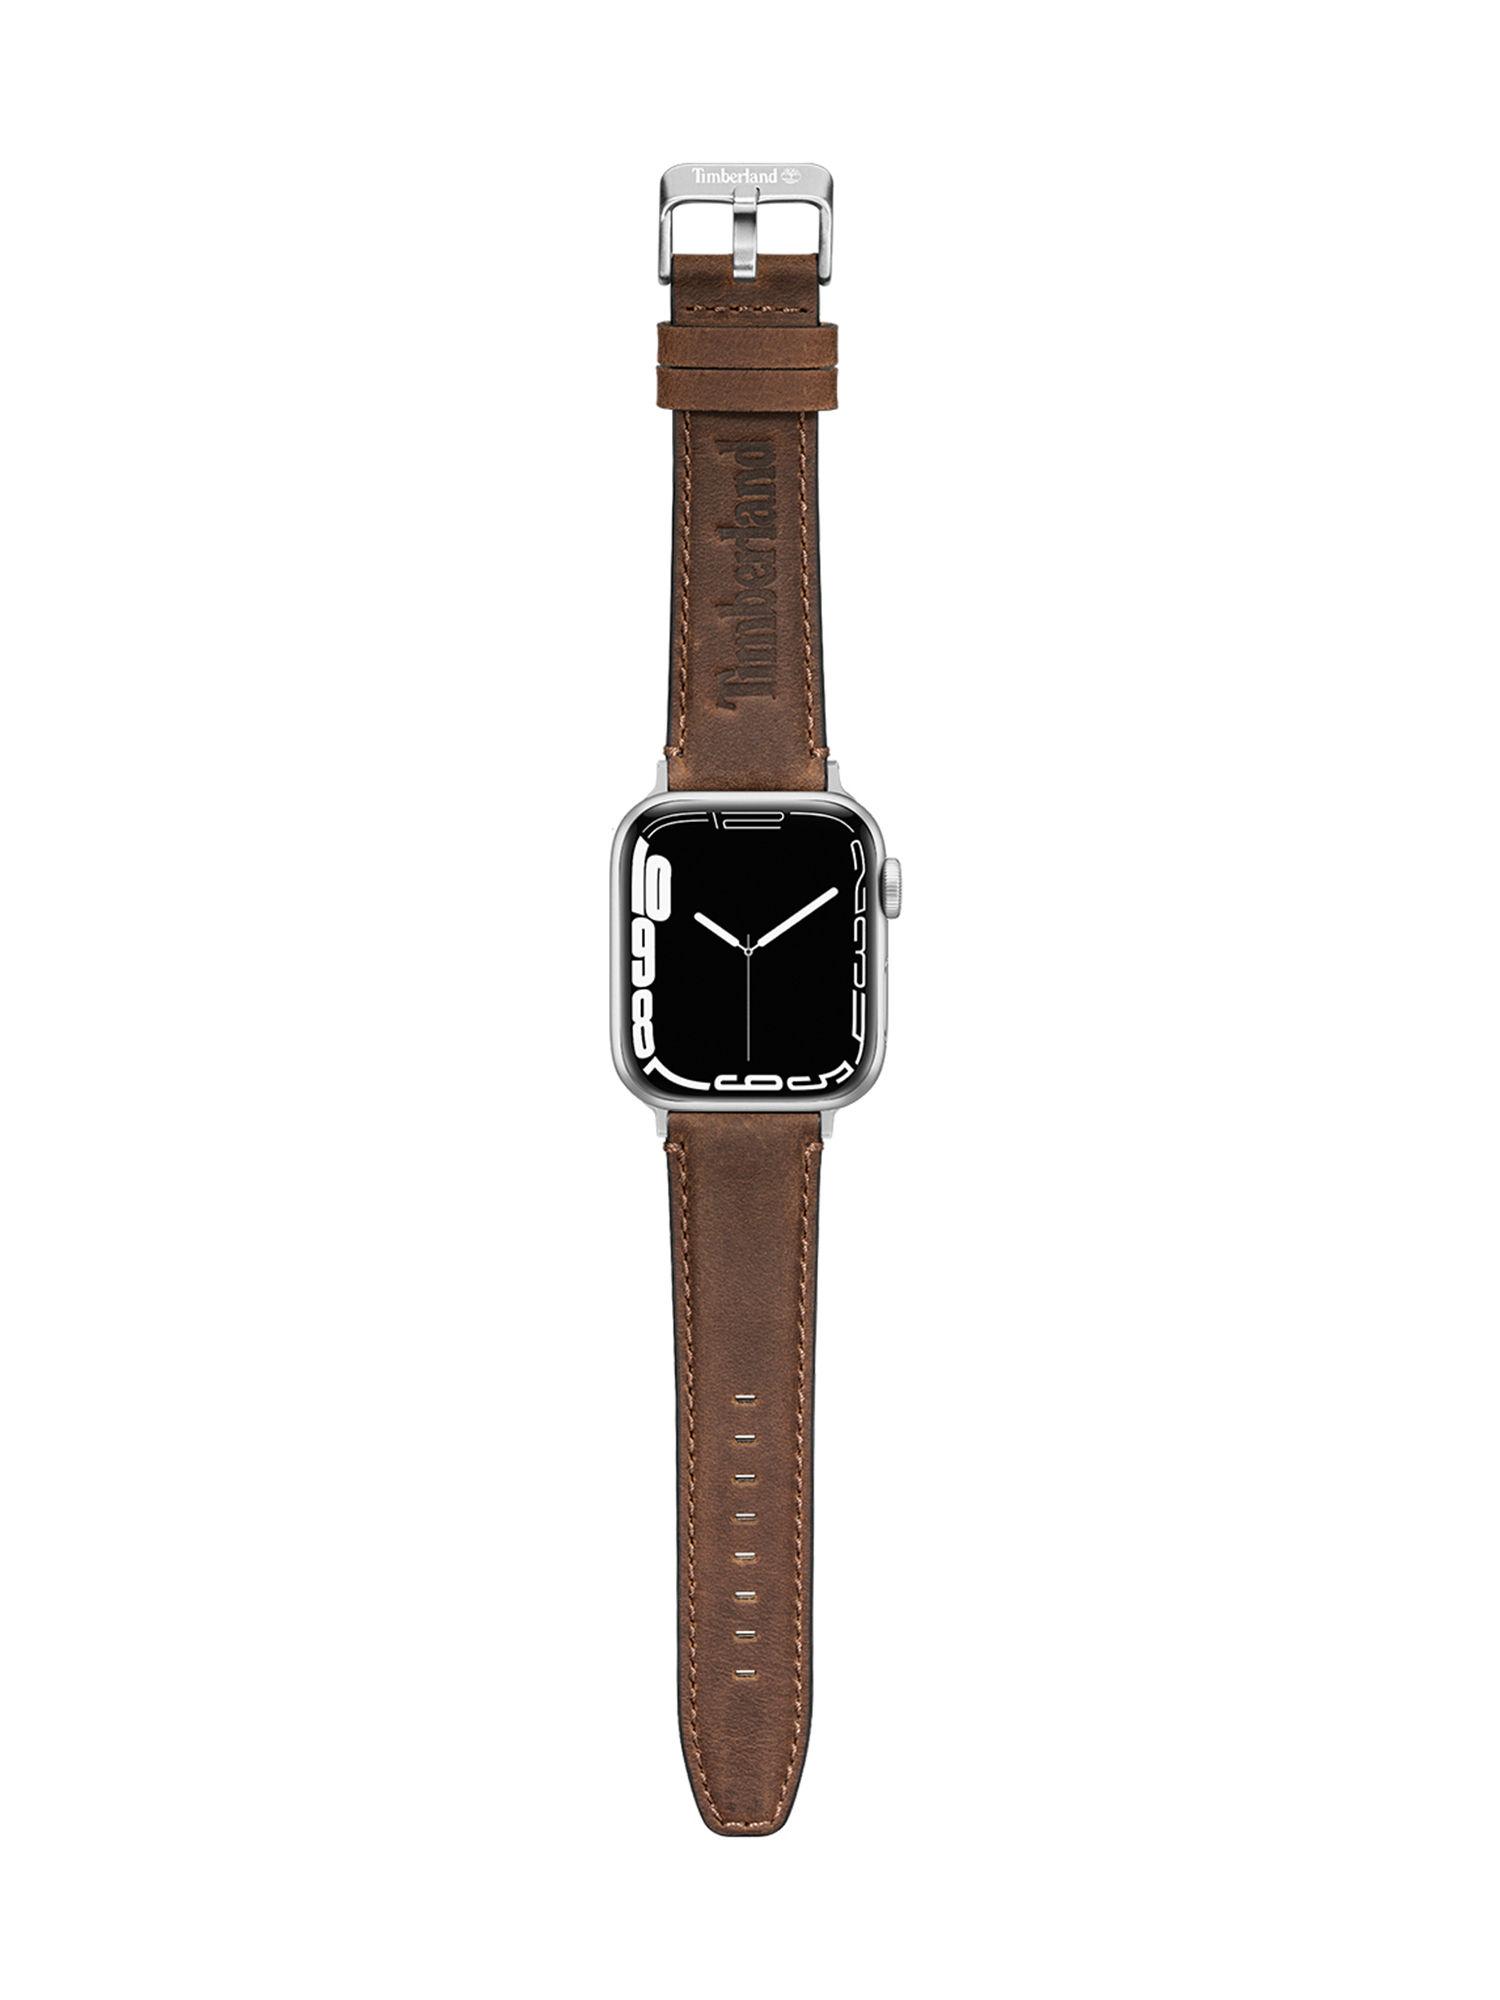 barnesbrook strap for apple/samsung smart watch 20mm brown color leather - tdoul0000703